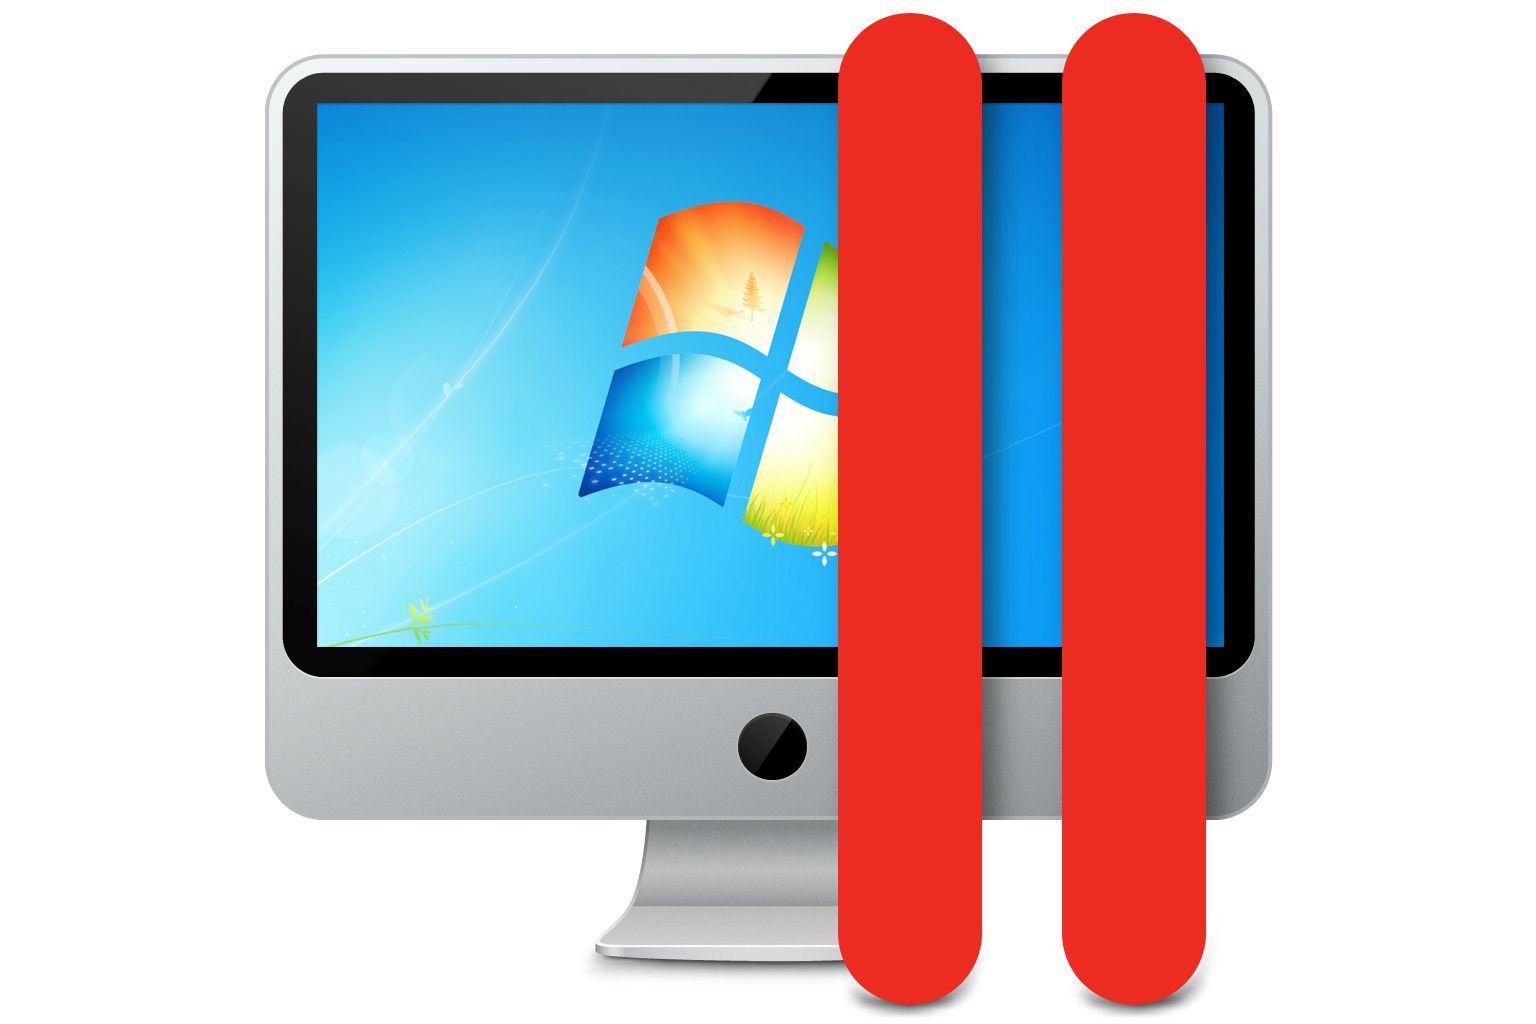 Mac Os X Free Virtualization Software